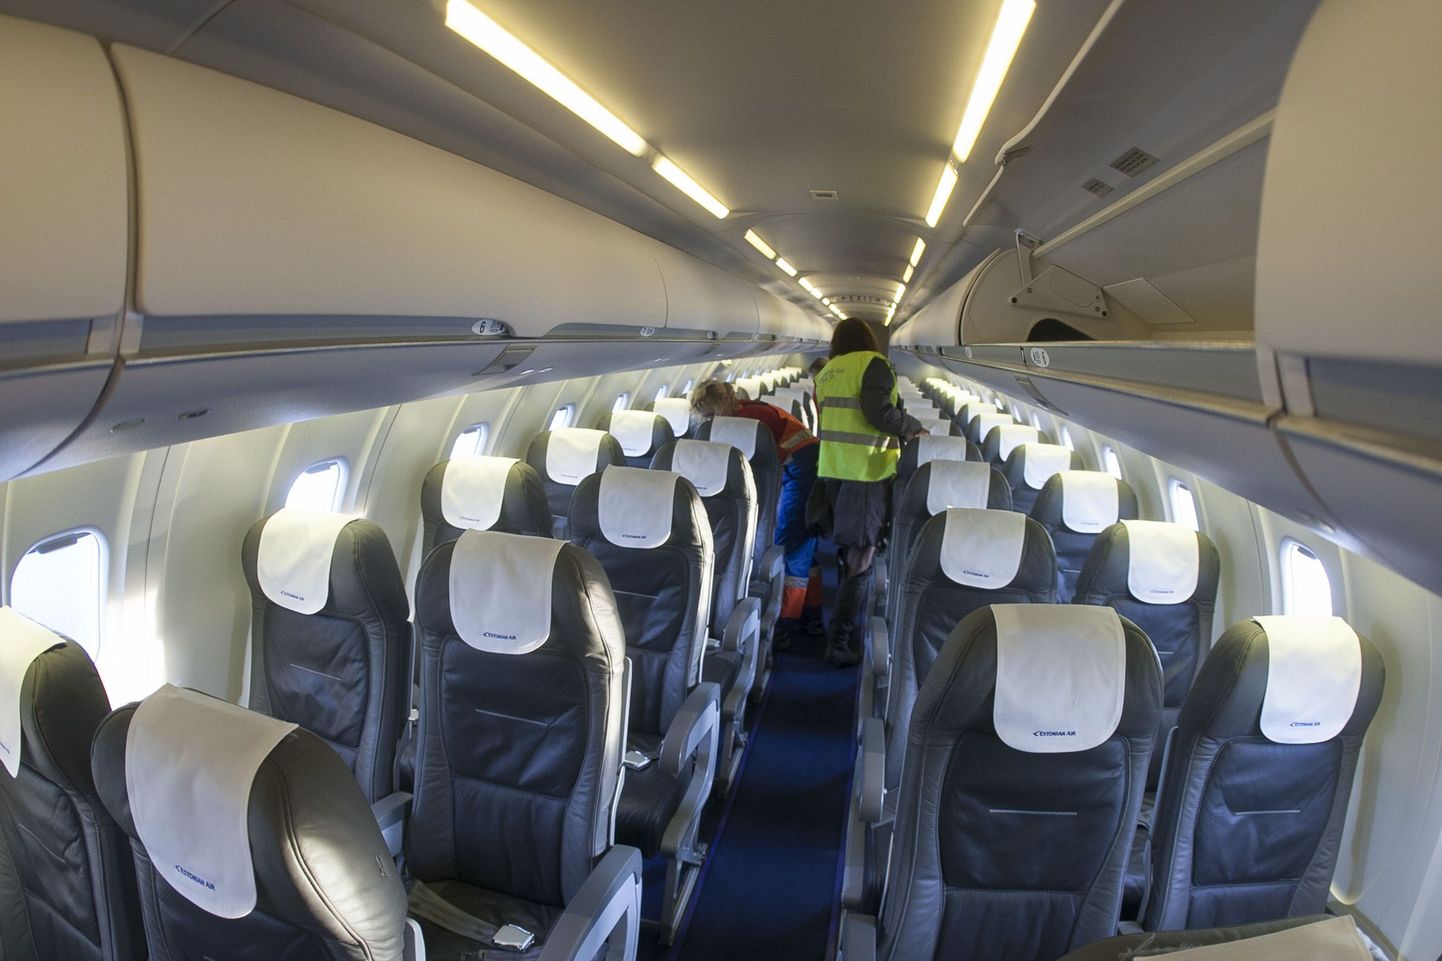 Салон самолета Bombardier CRJ-700. Иллюстративное фото.